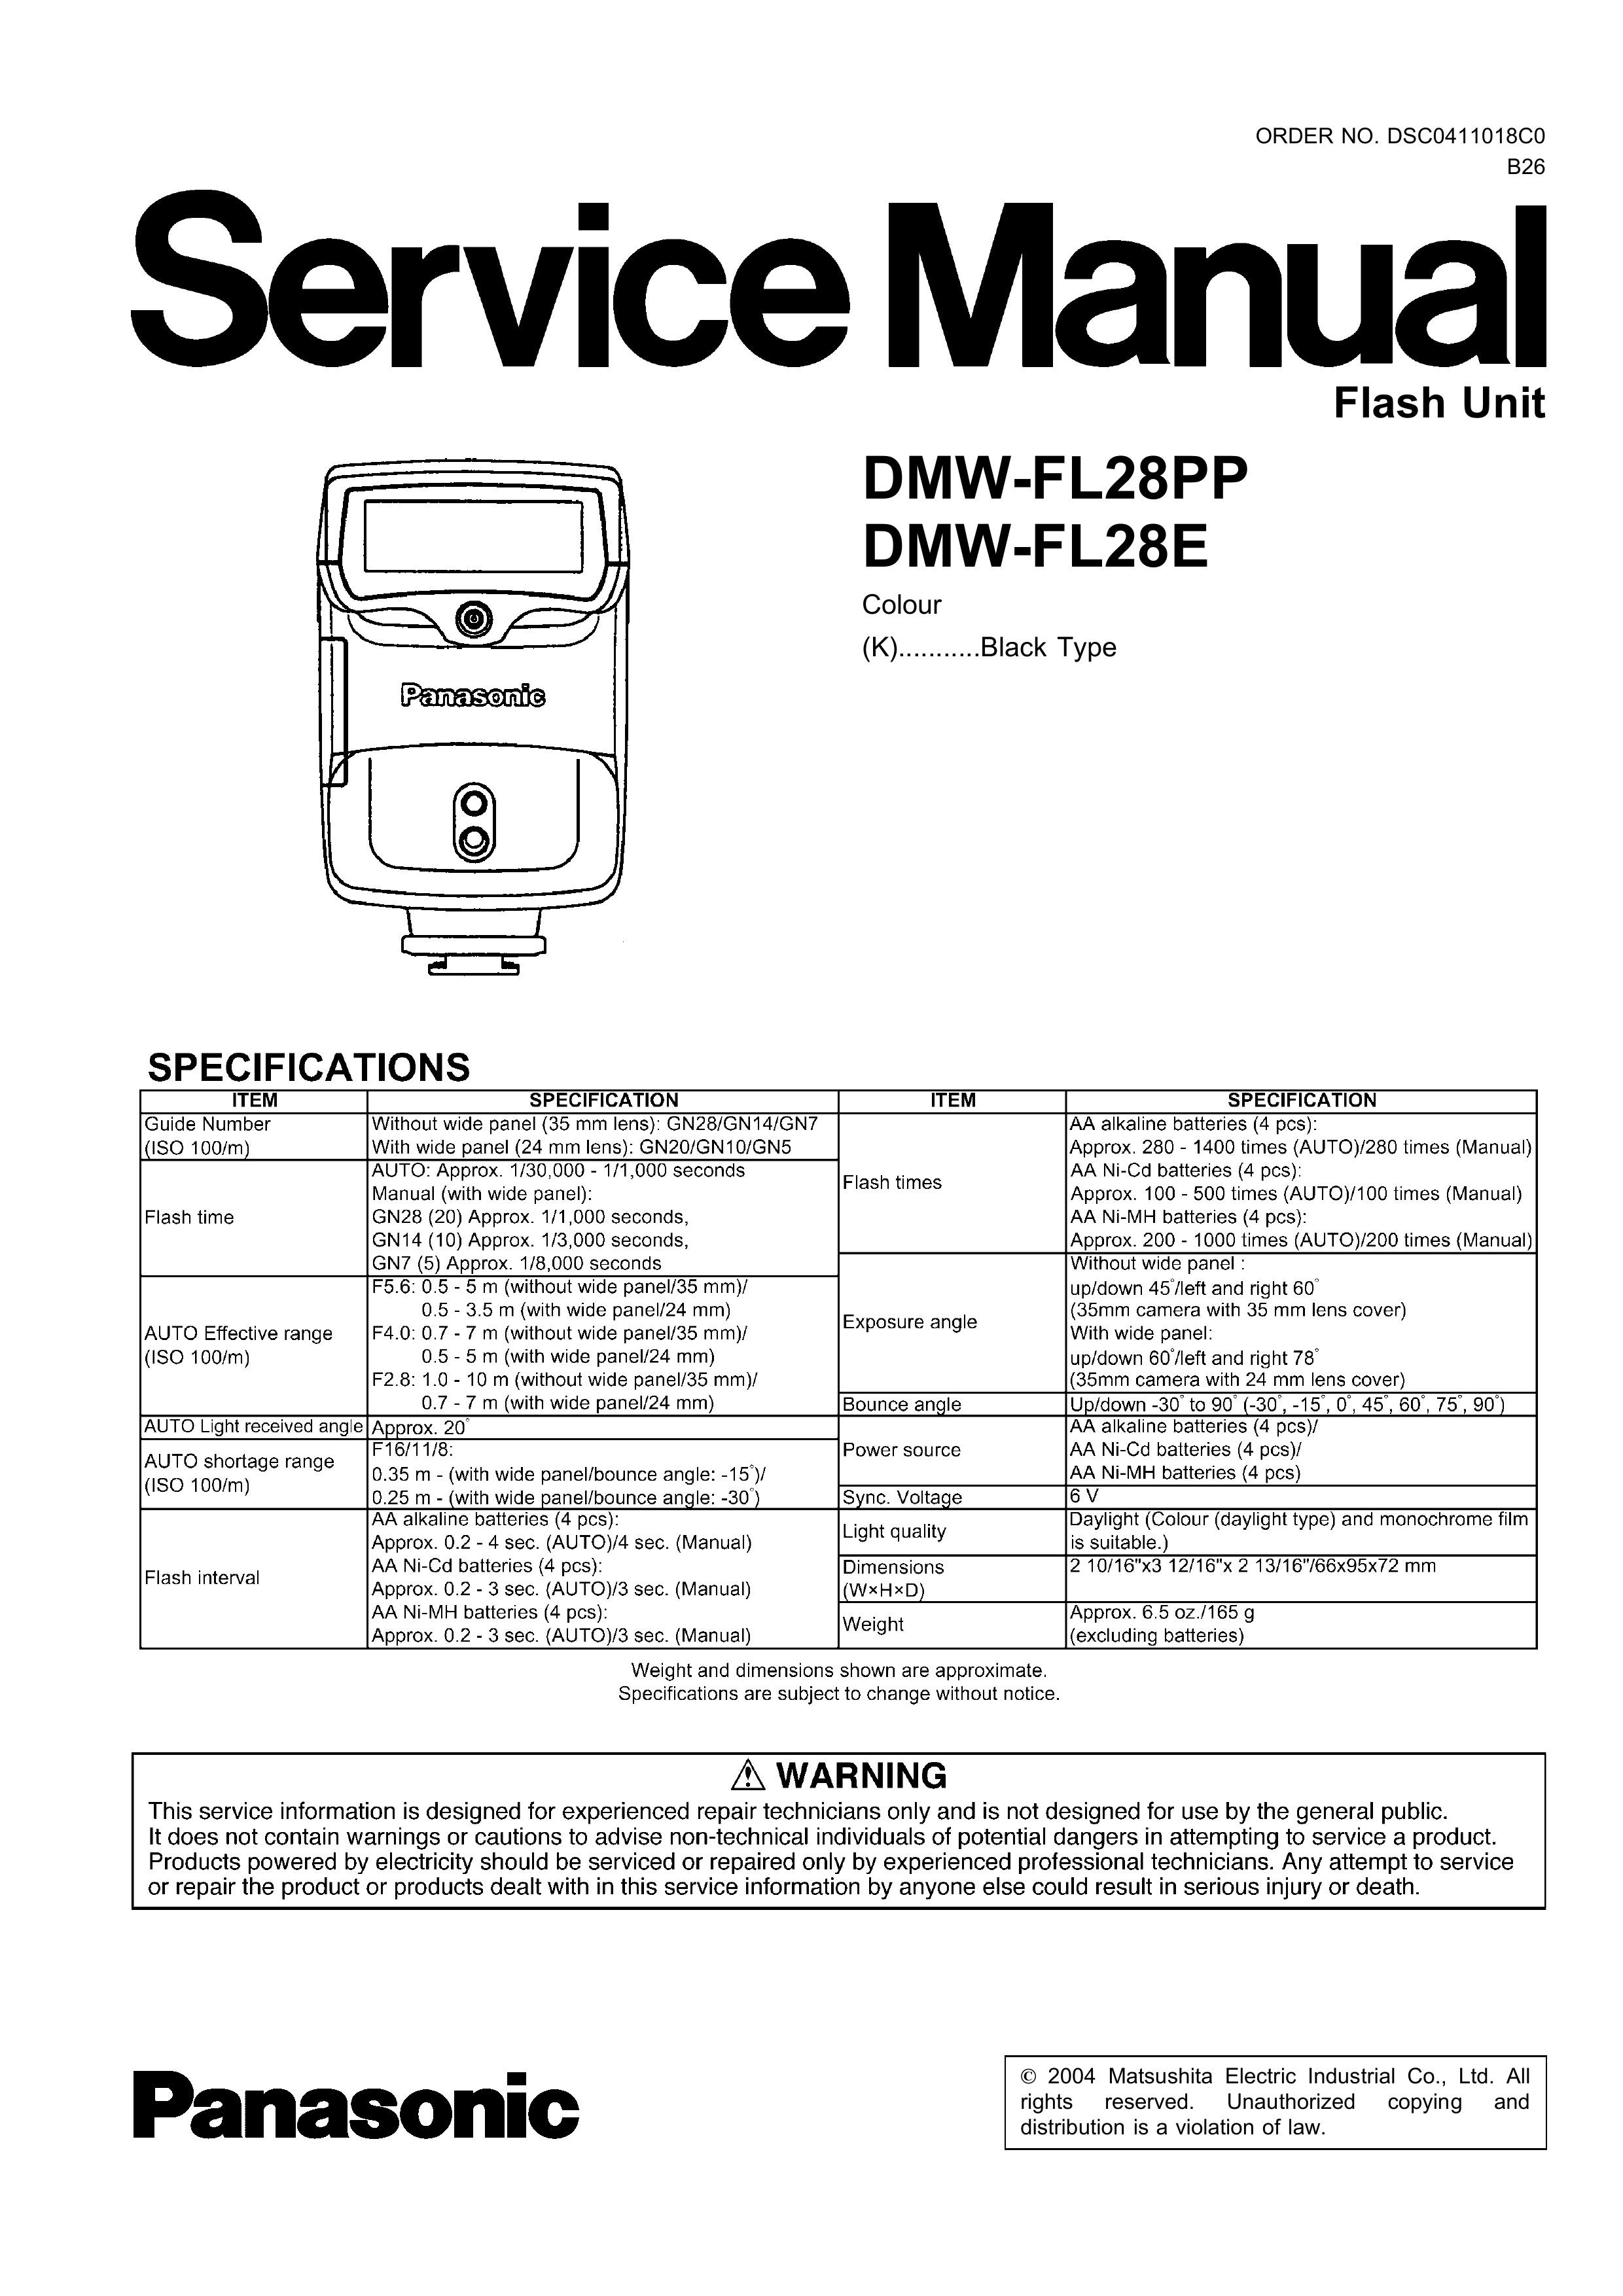 Panasonic DMW-FL28PP Camera Flash User Manual